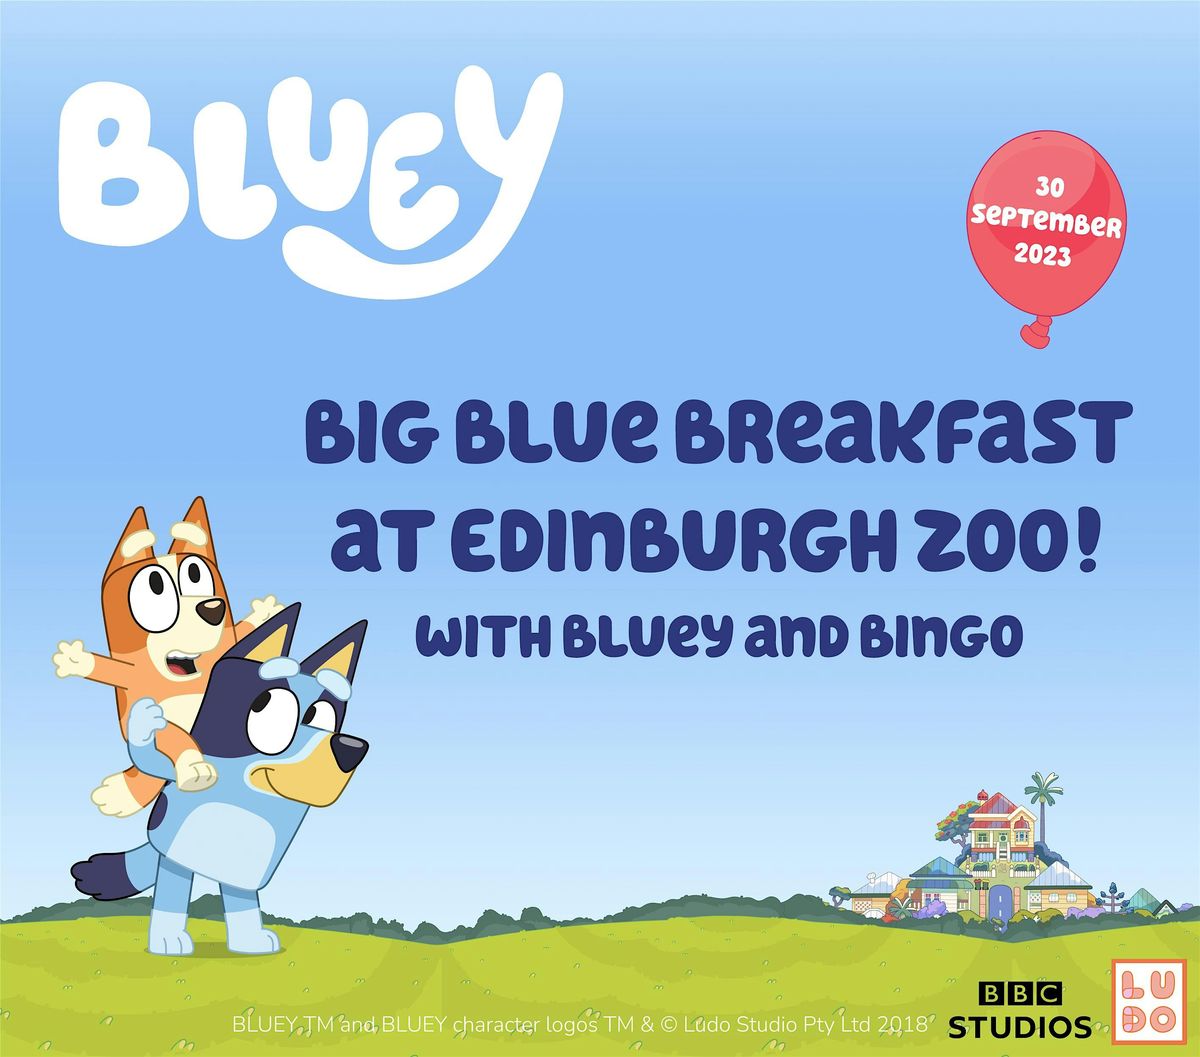 Big Blue Breakfast at Edinburgh Zoo